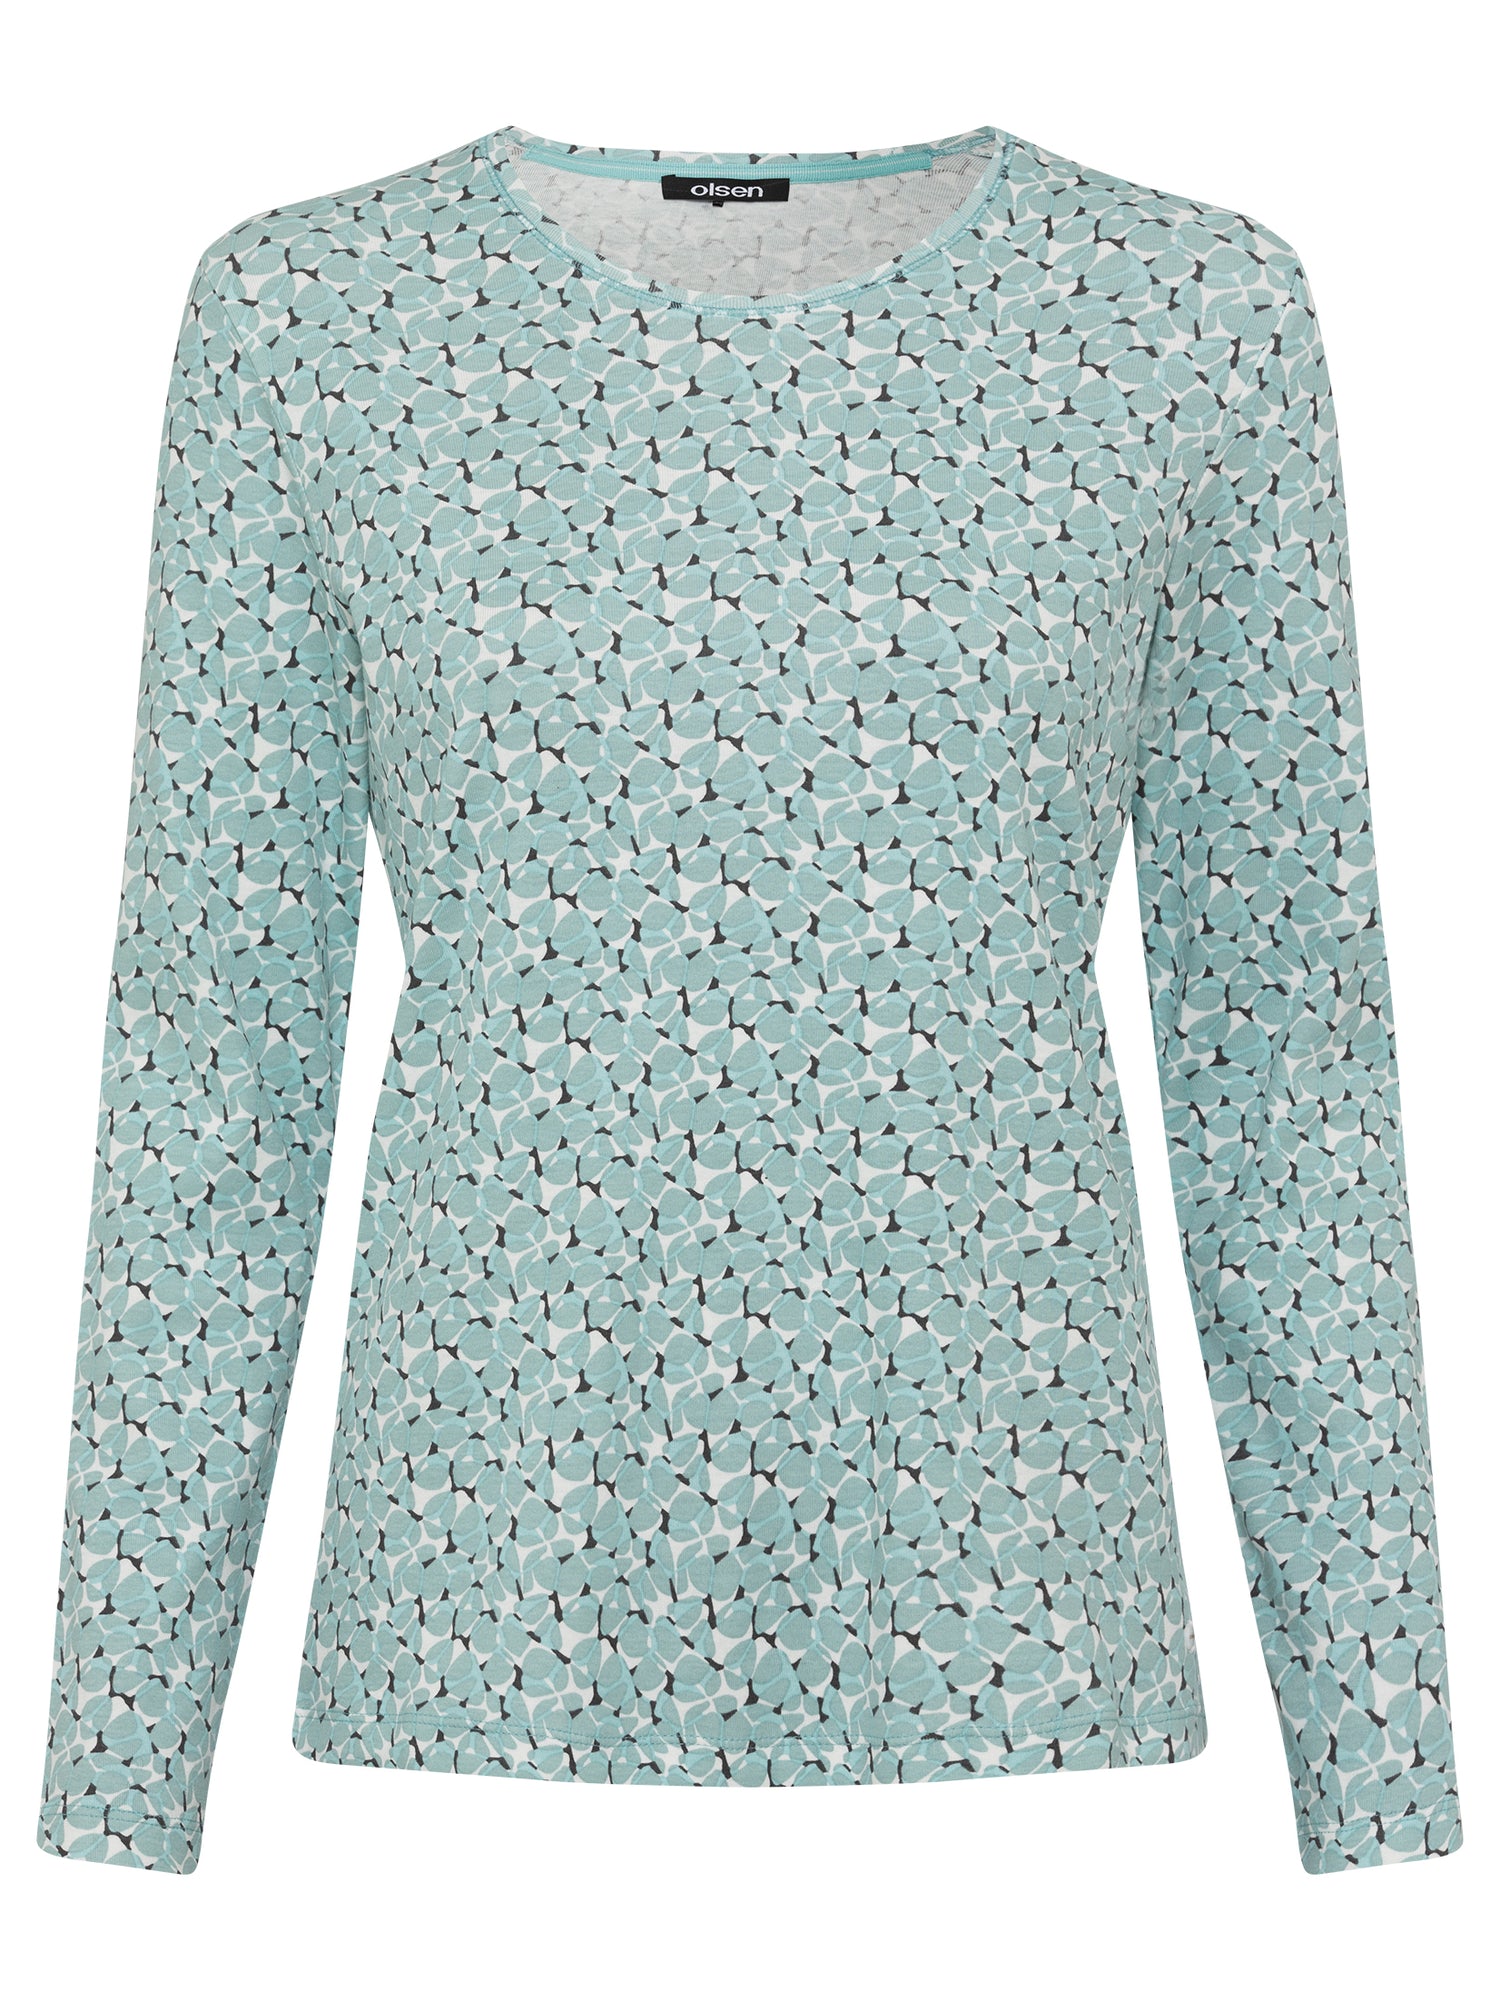 Olsen Pebble Print Shirt - Long Sleeves